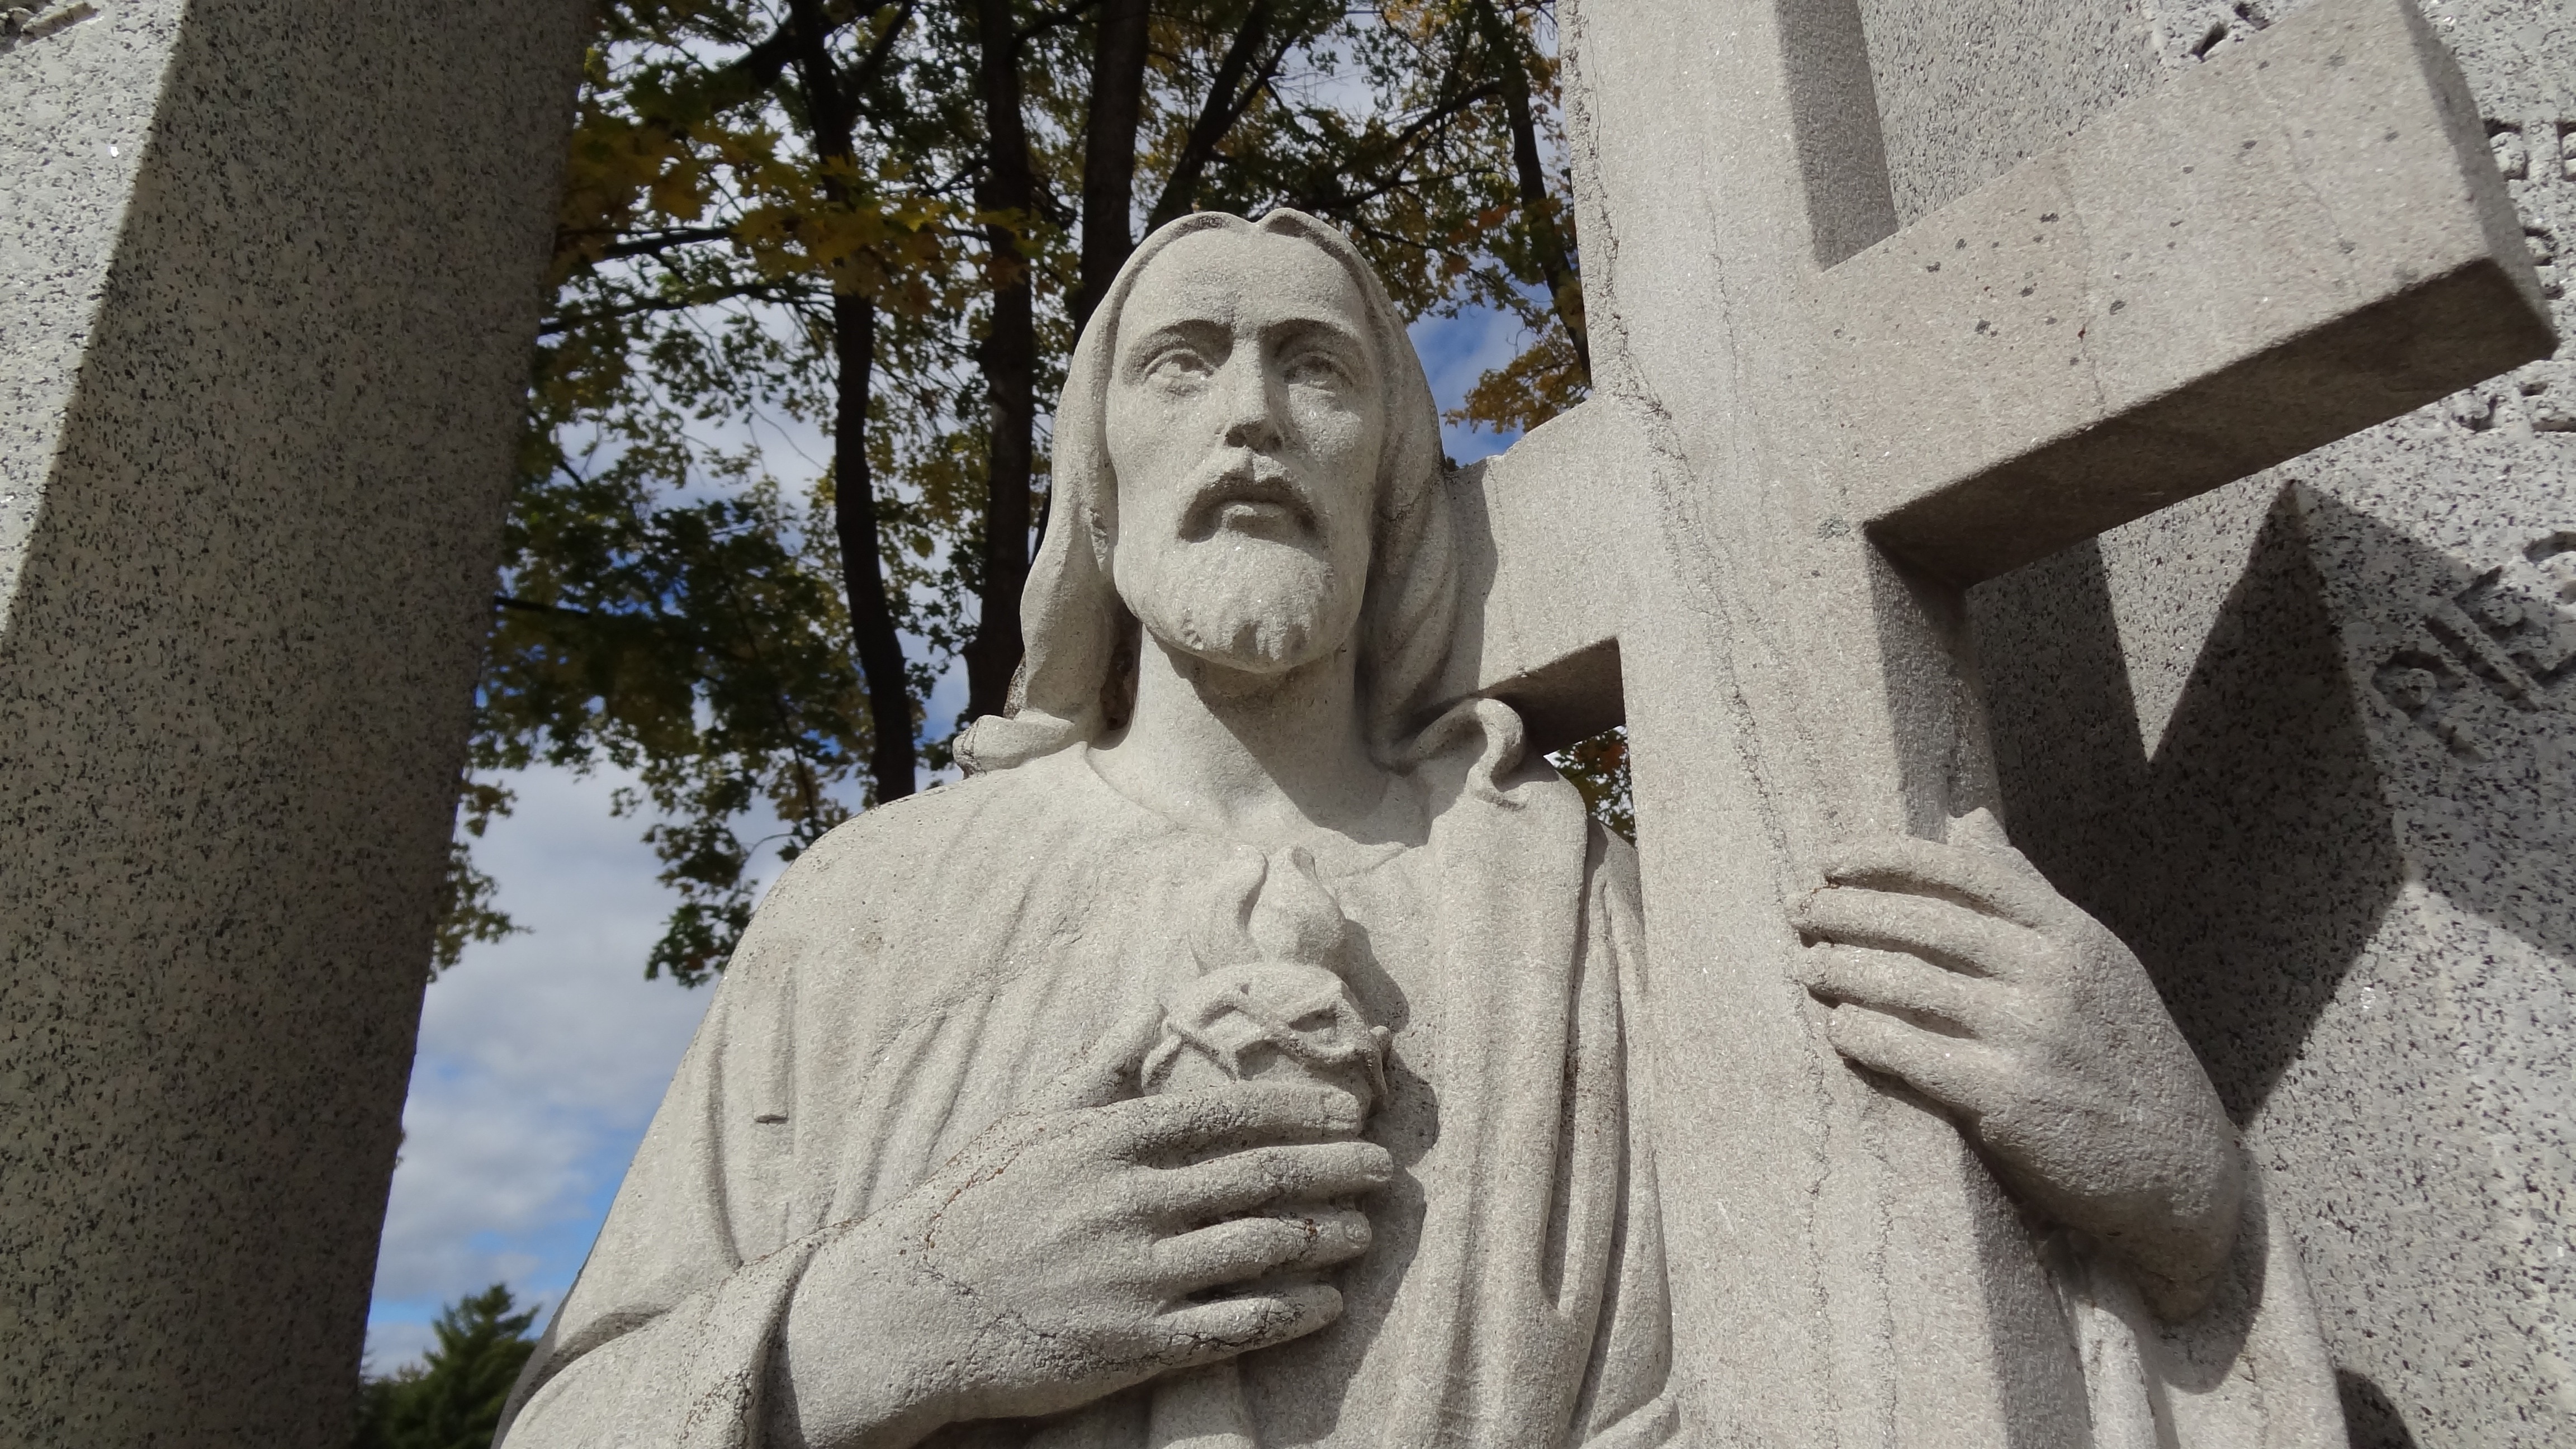 jessus christ with cross concrete statue